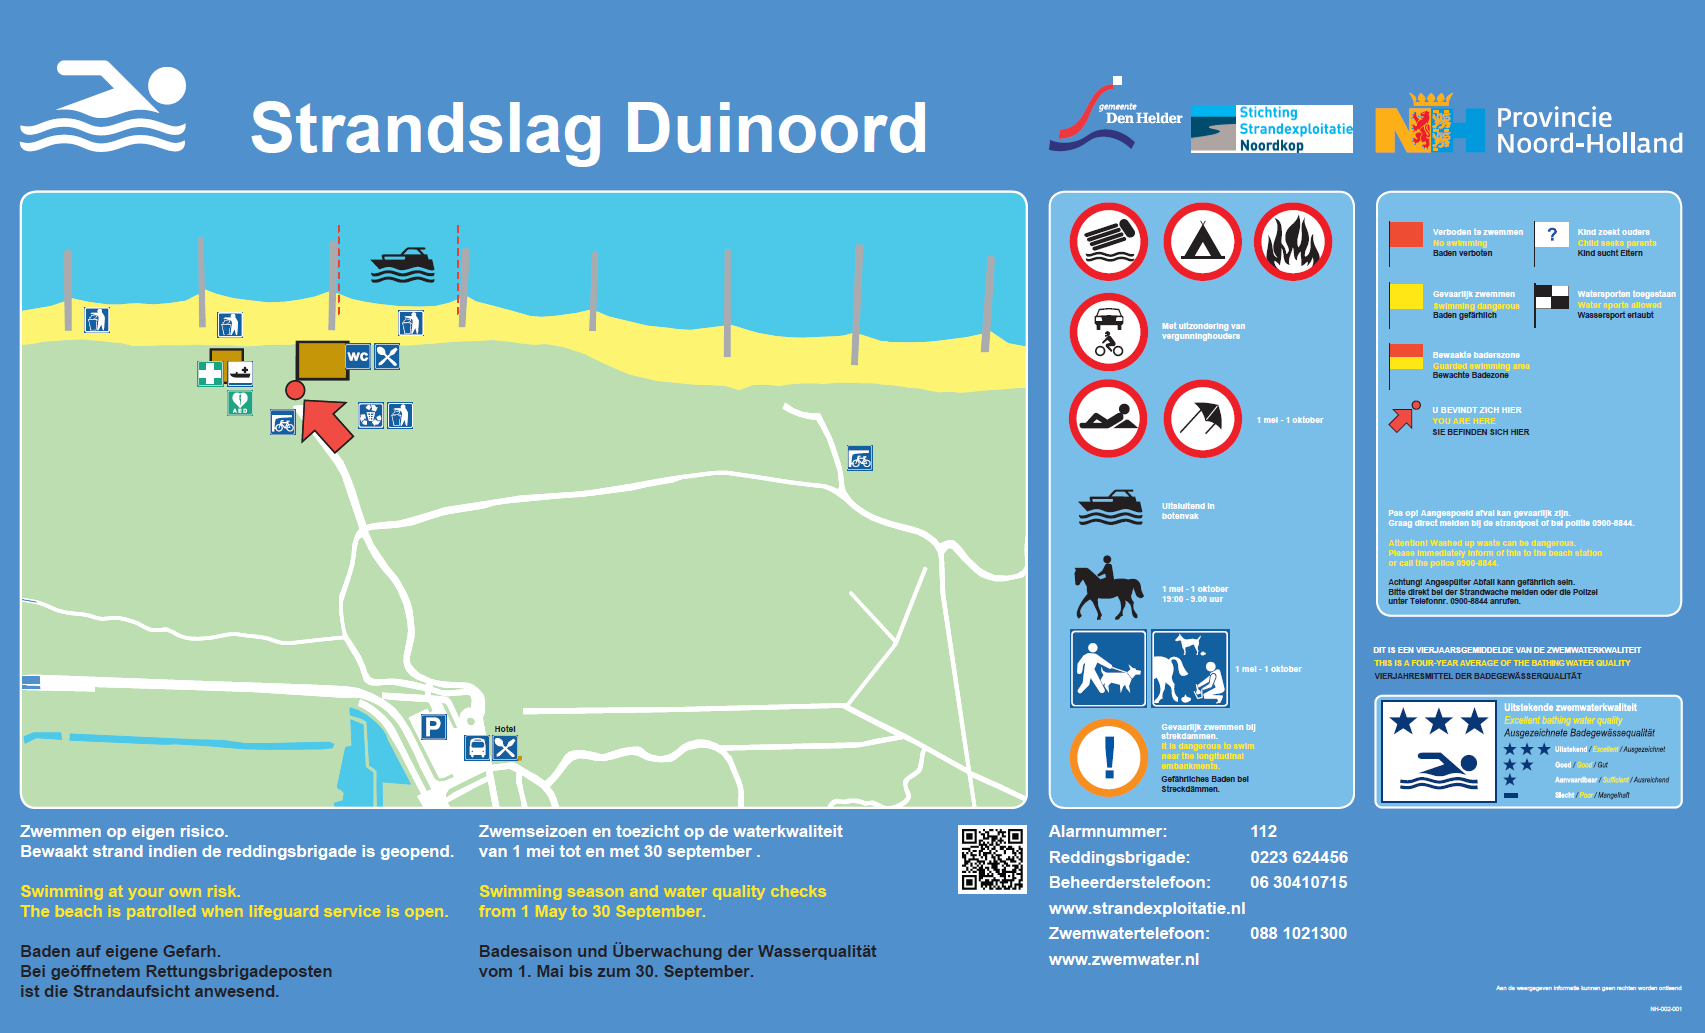 The information board at the swimming location Huisduinen, Strandslag Duinoord